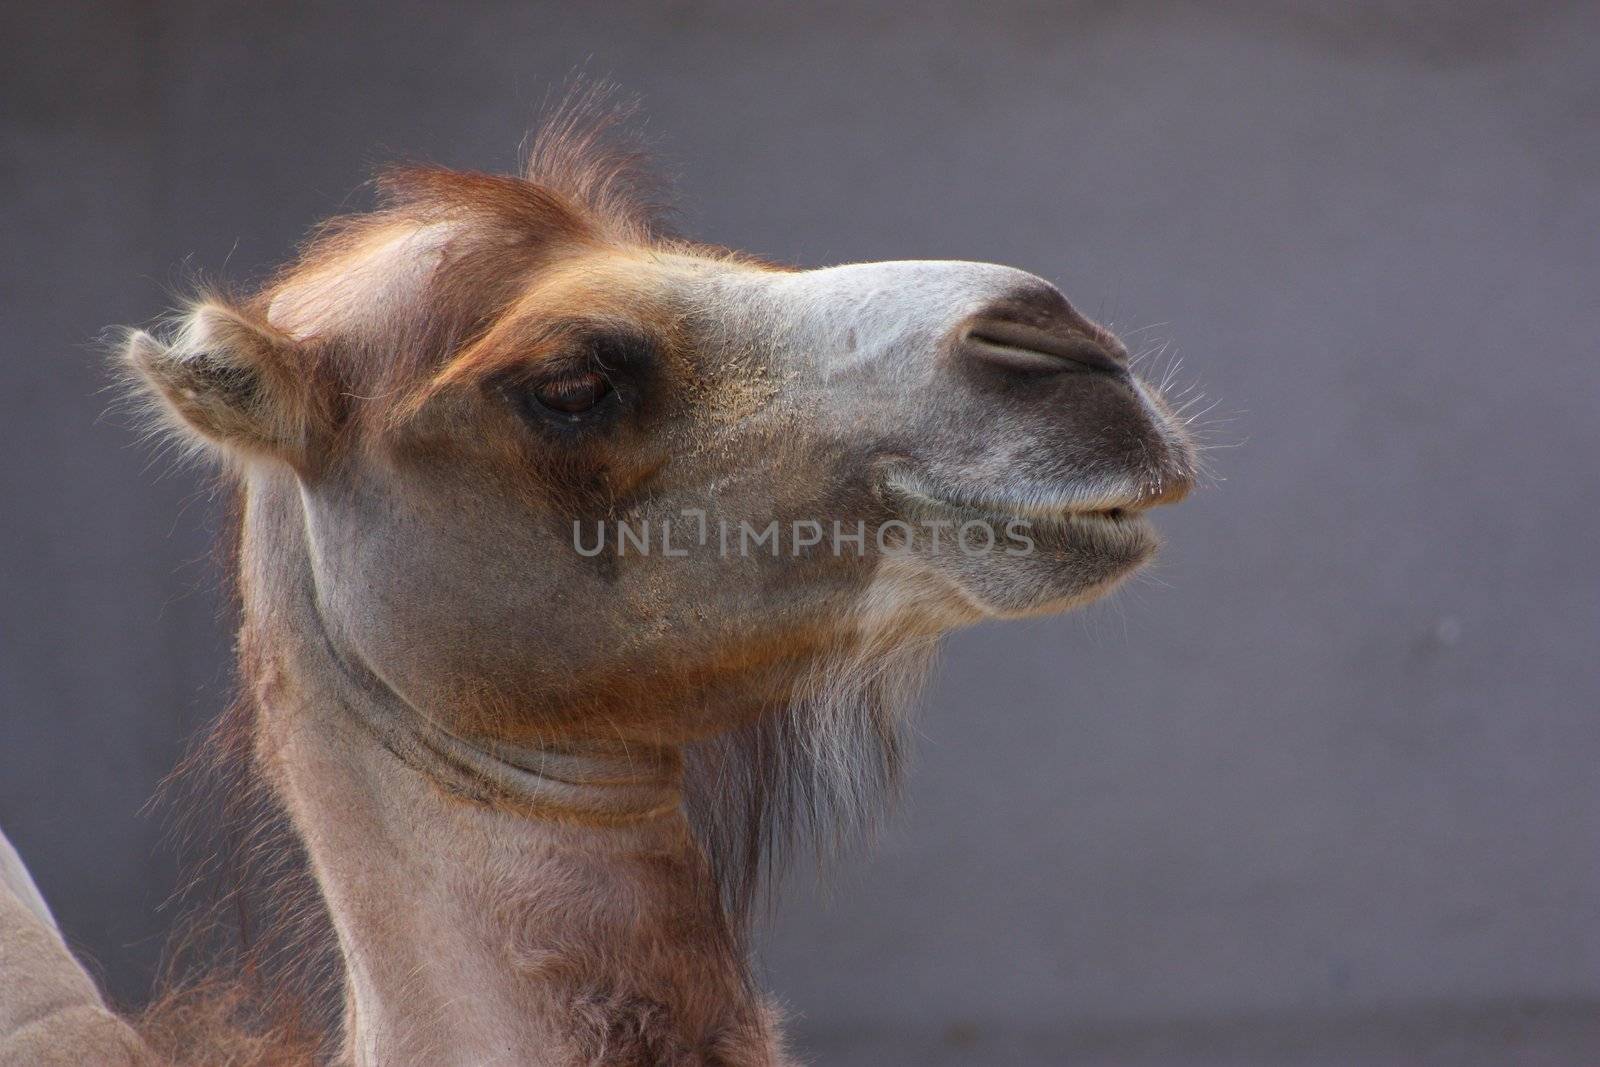 Camel's head by yippikaye